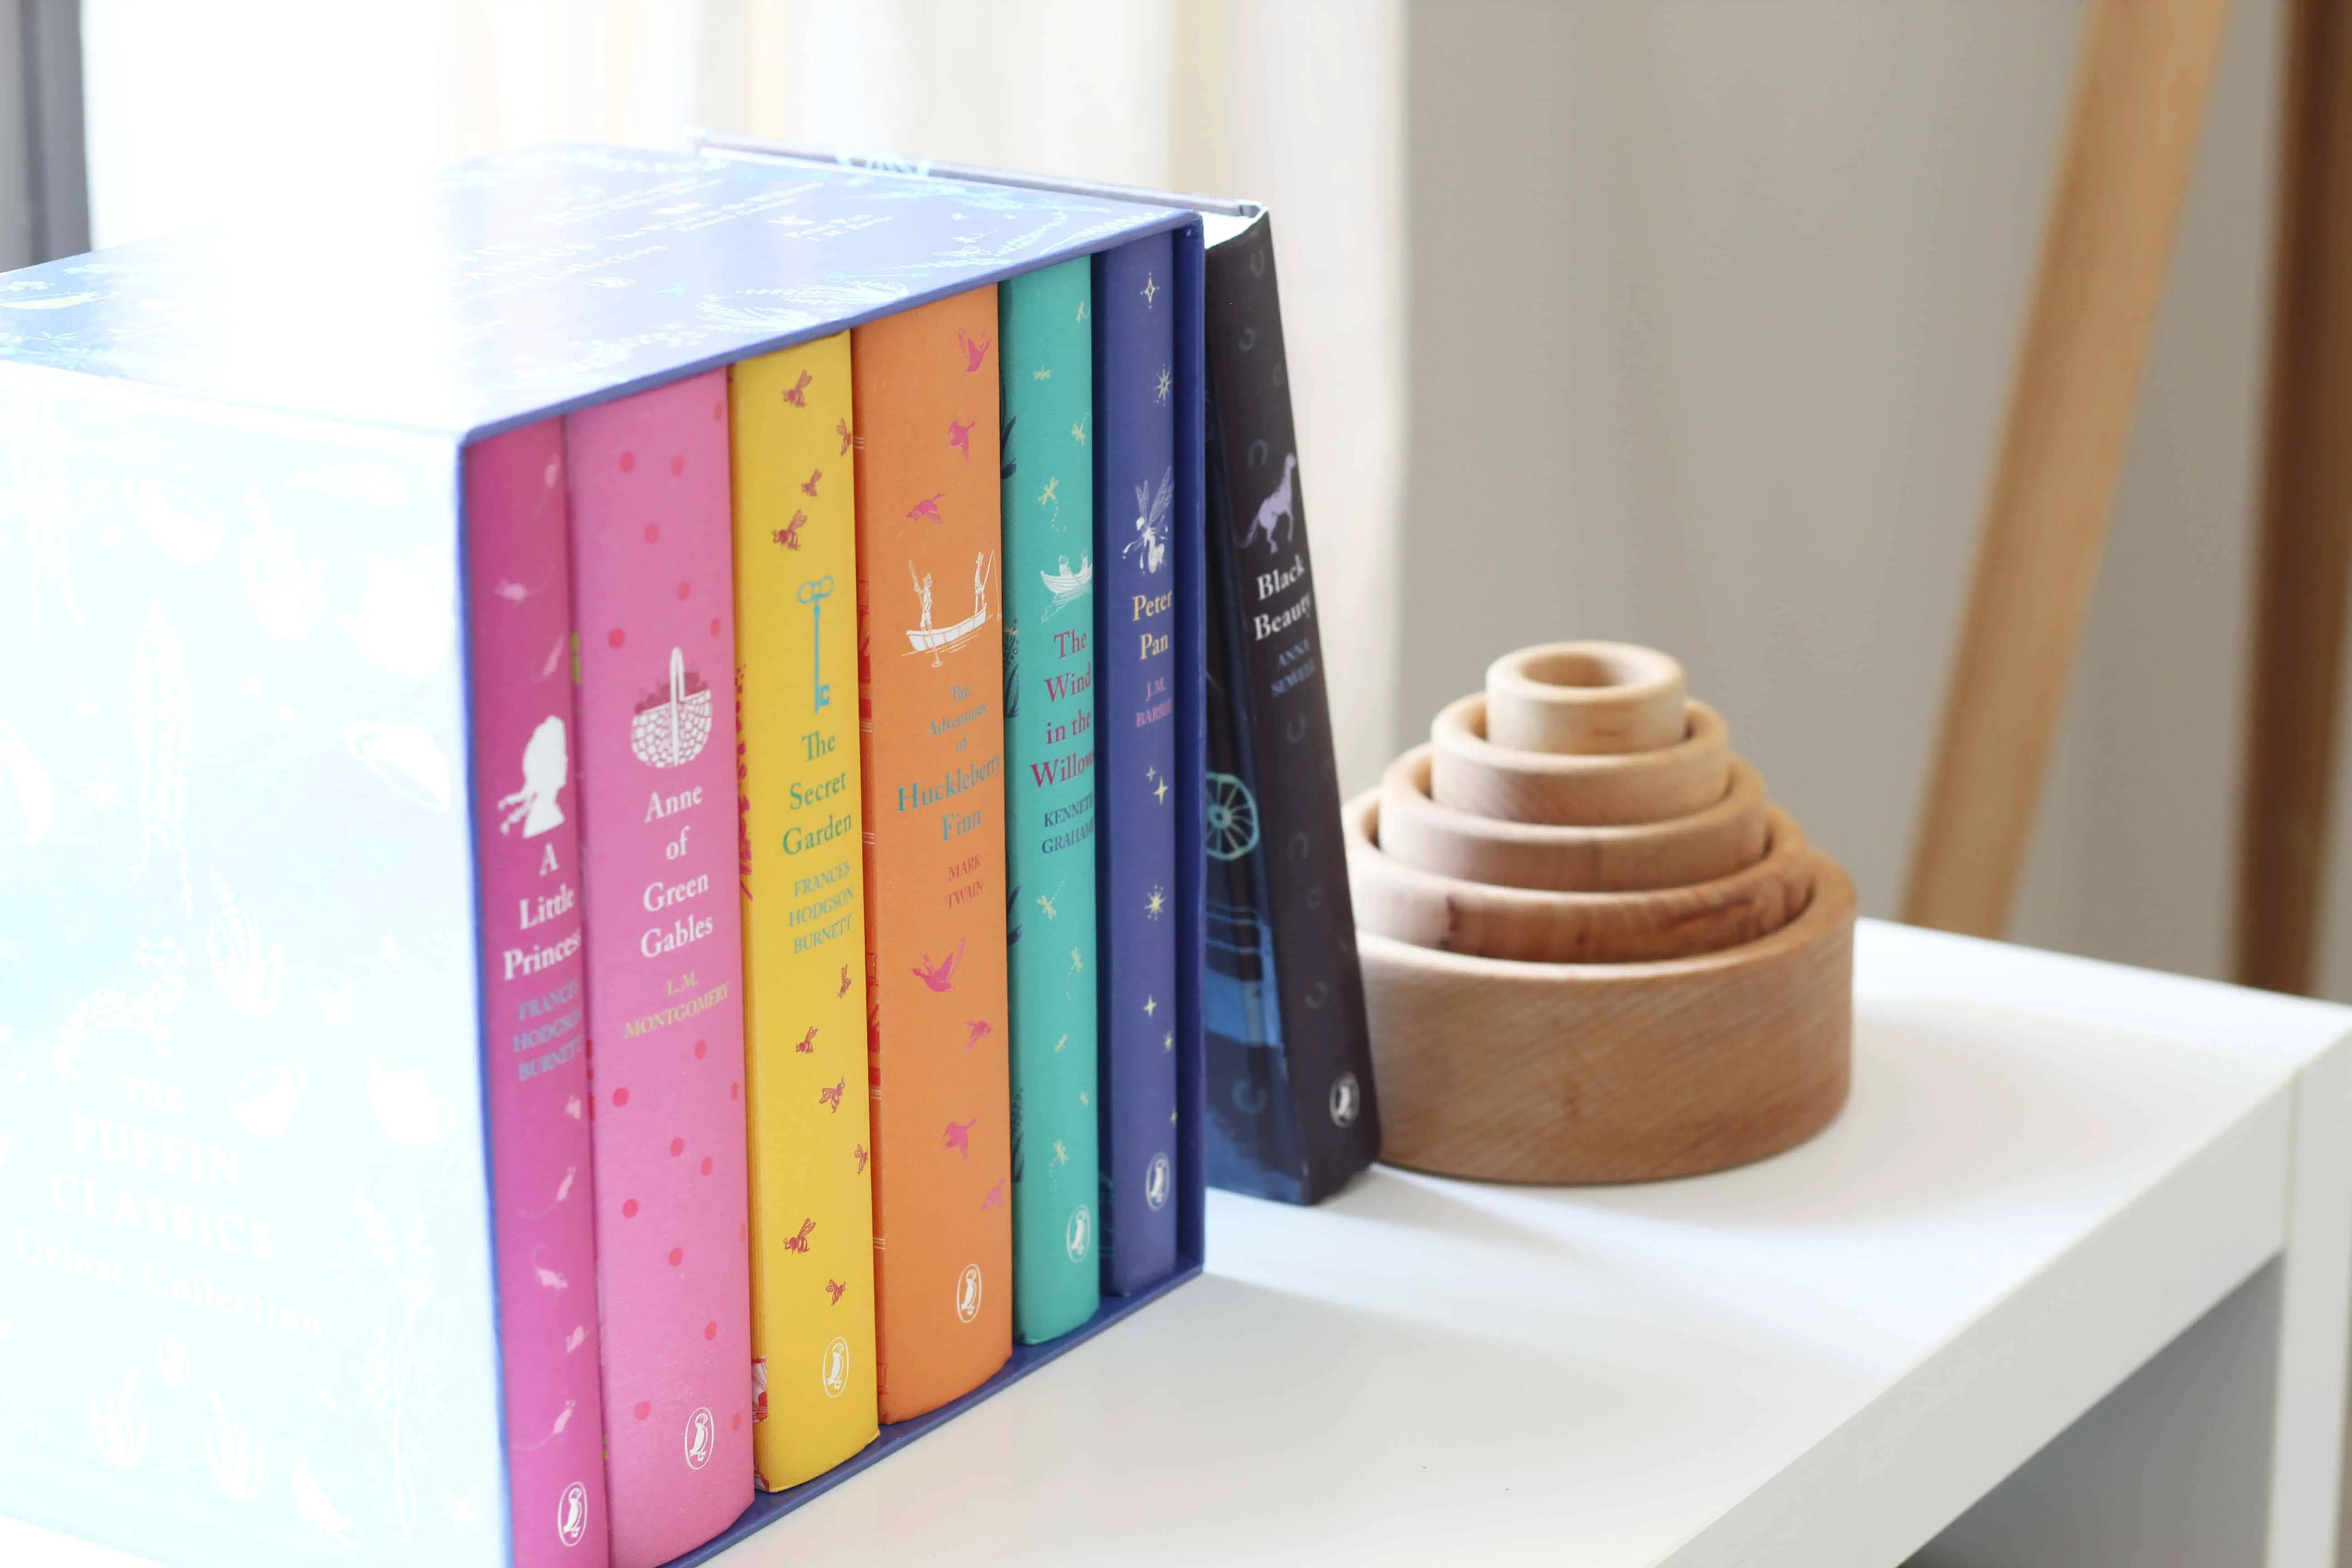 puffin classics book set, grimm wood nesting bowls